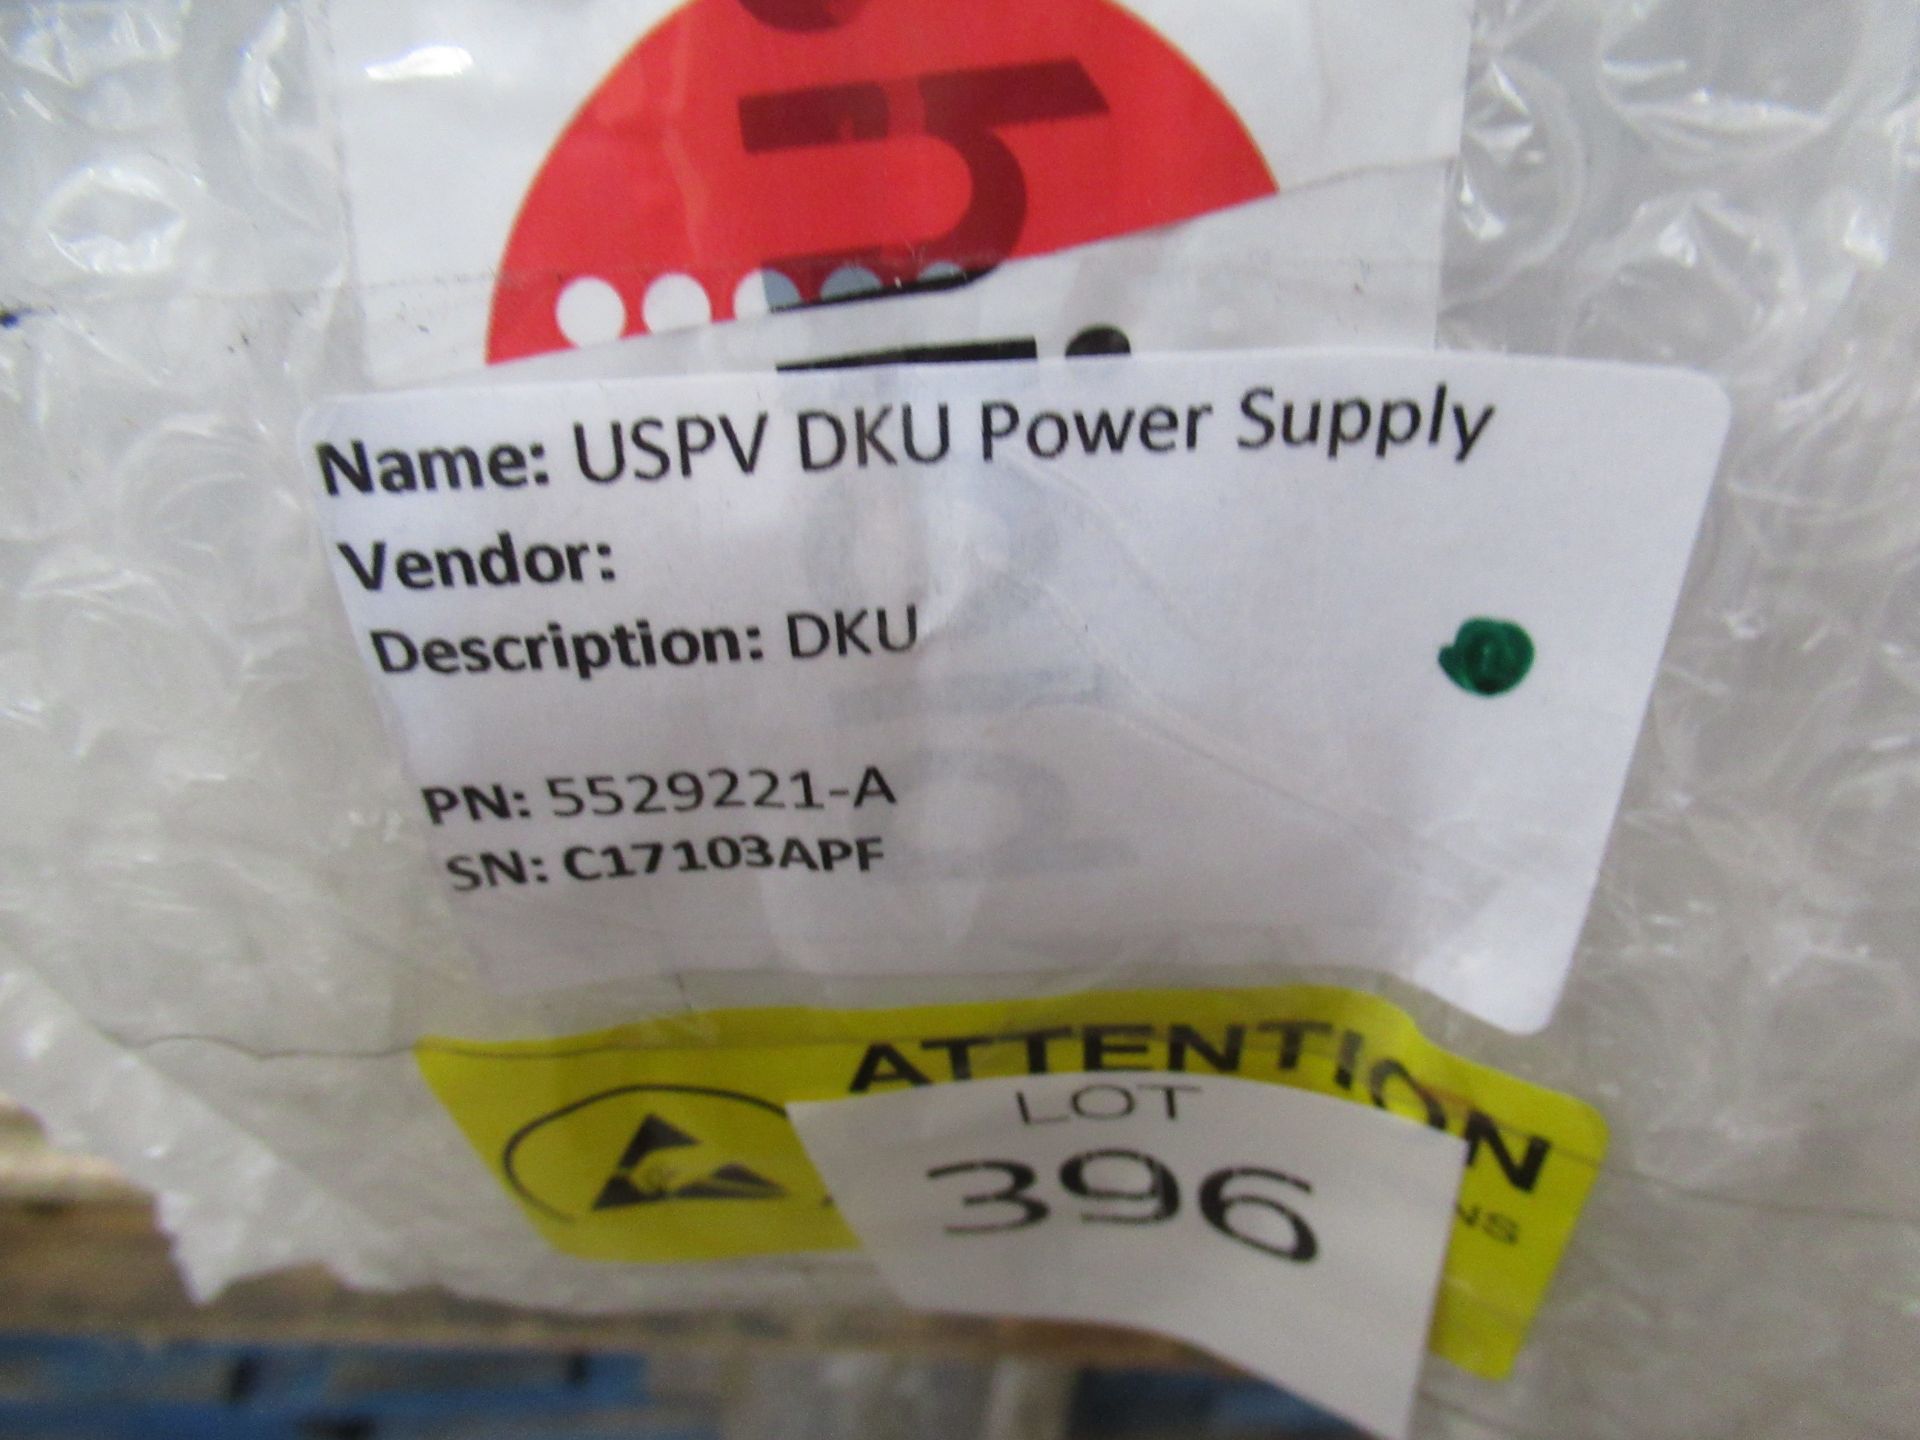 1 x USPV DKU Power Supply - Image 2 of 3